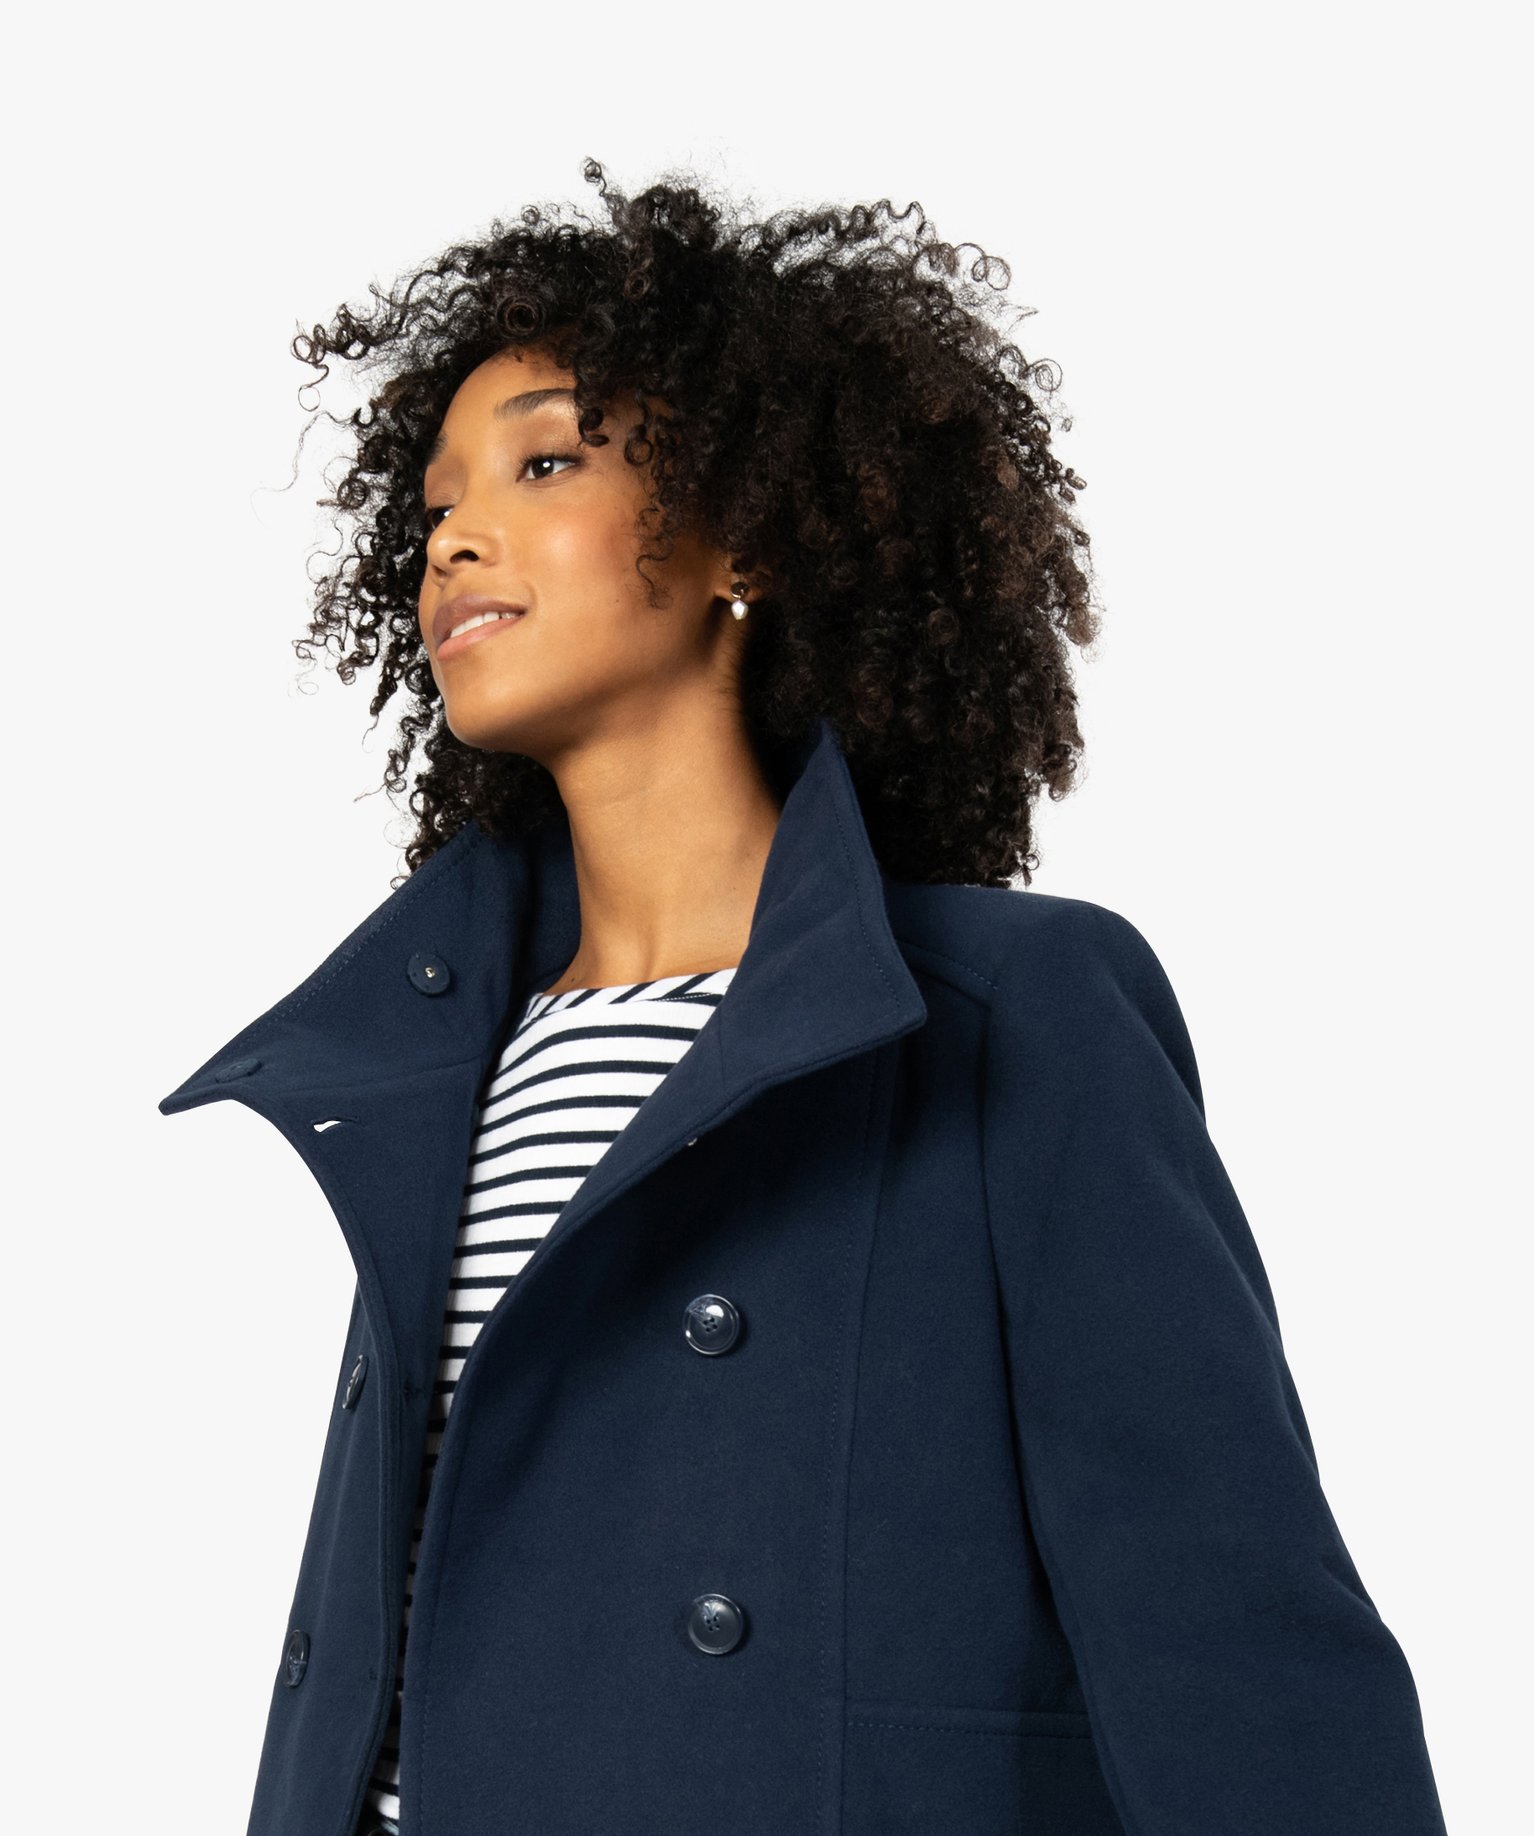 manteau femme bleu marine avec capuche